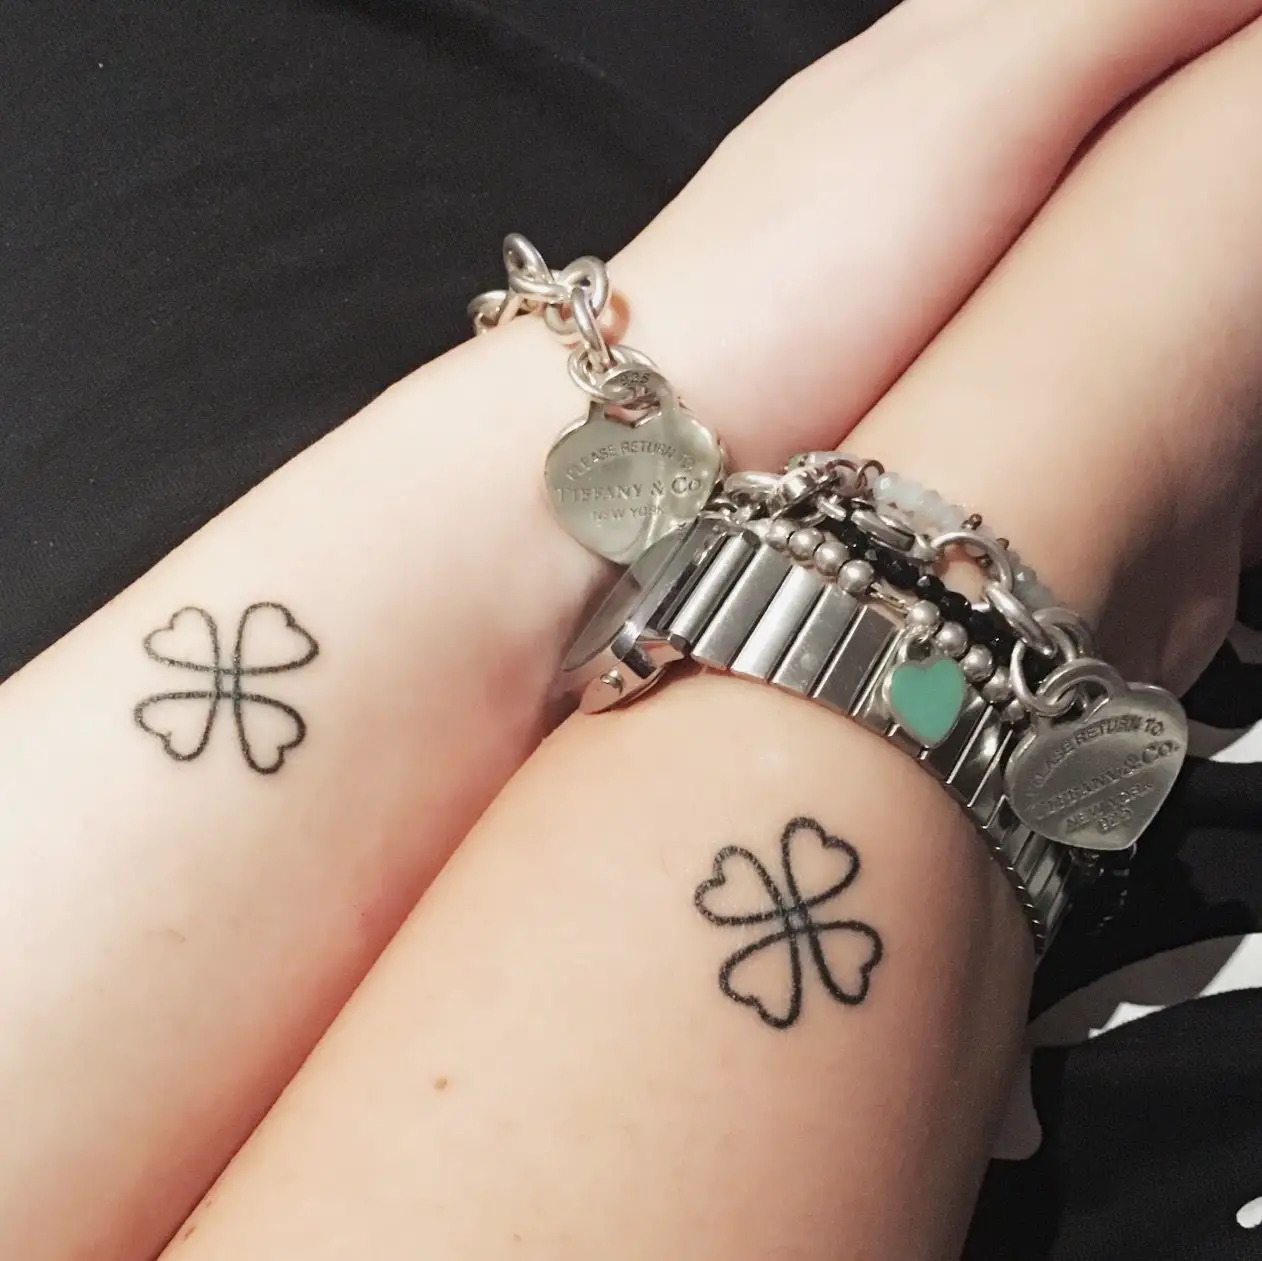 Tatuajes pequeños para amigas